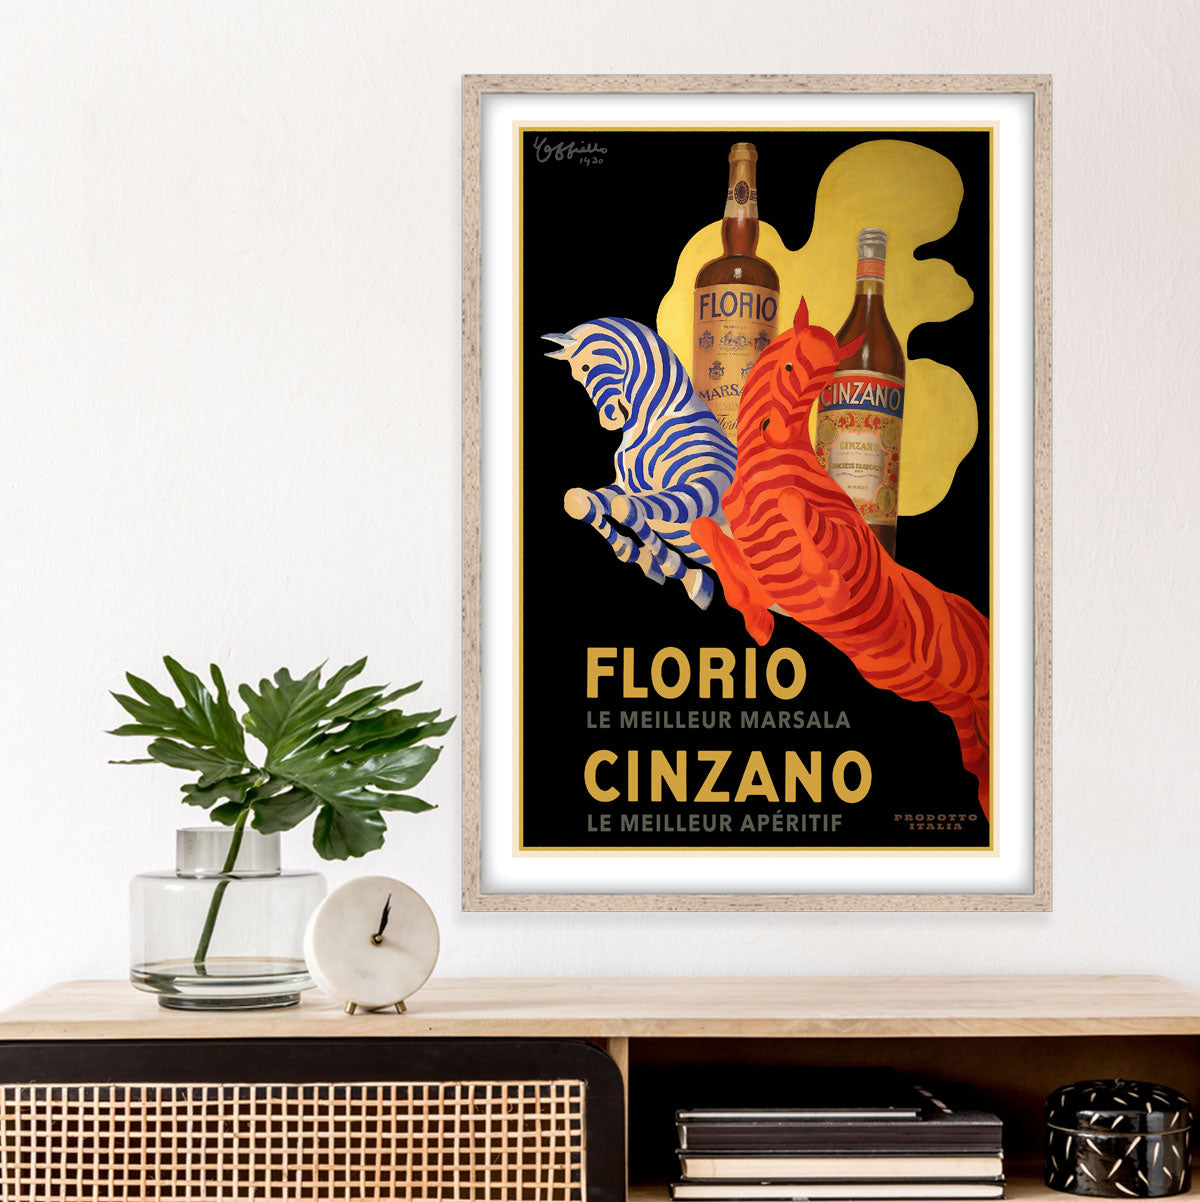 Florio Cinzano Italy retro vintage advertising poster from Places We Luv